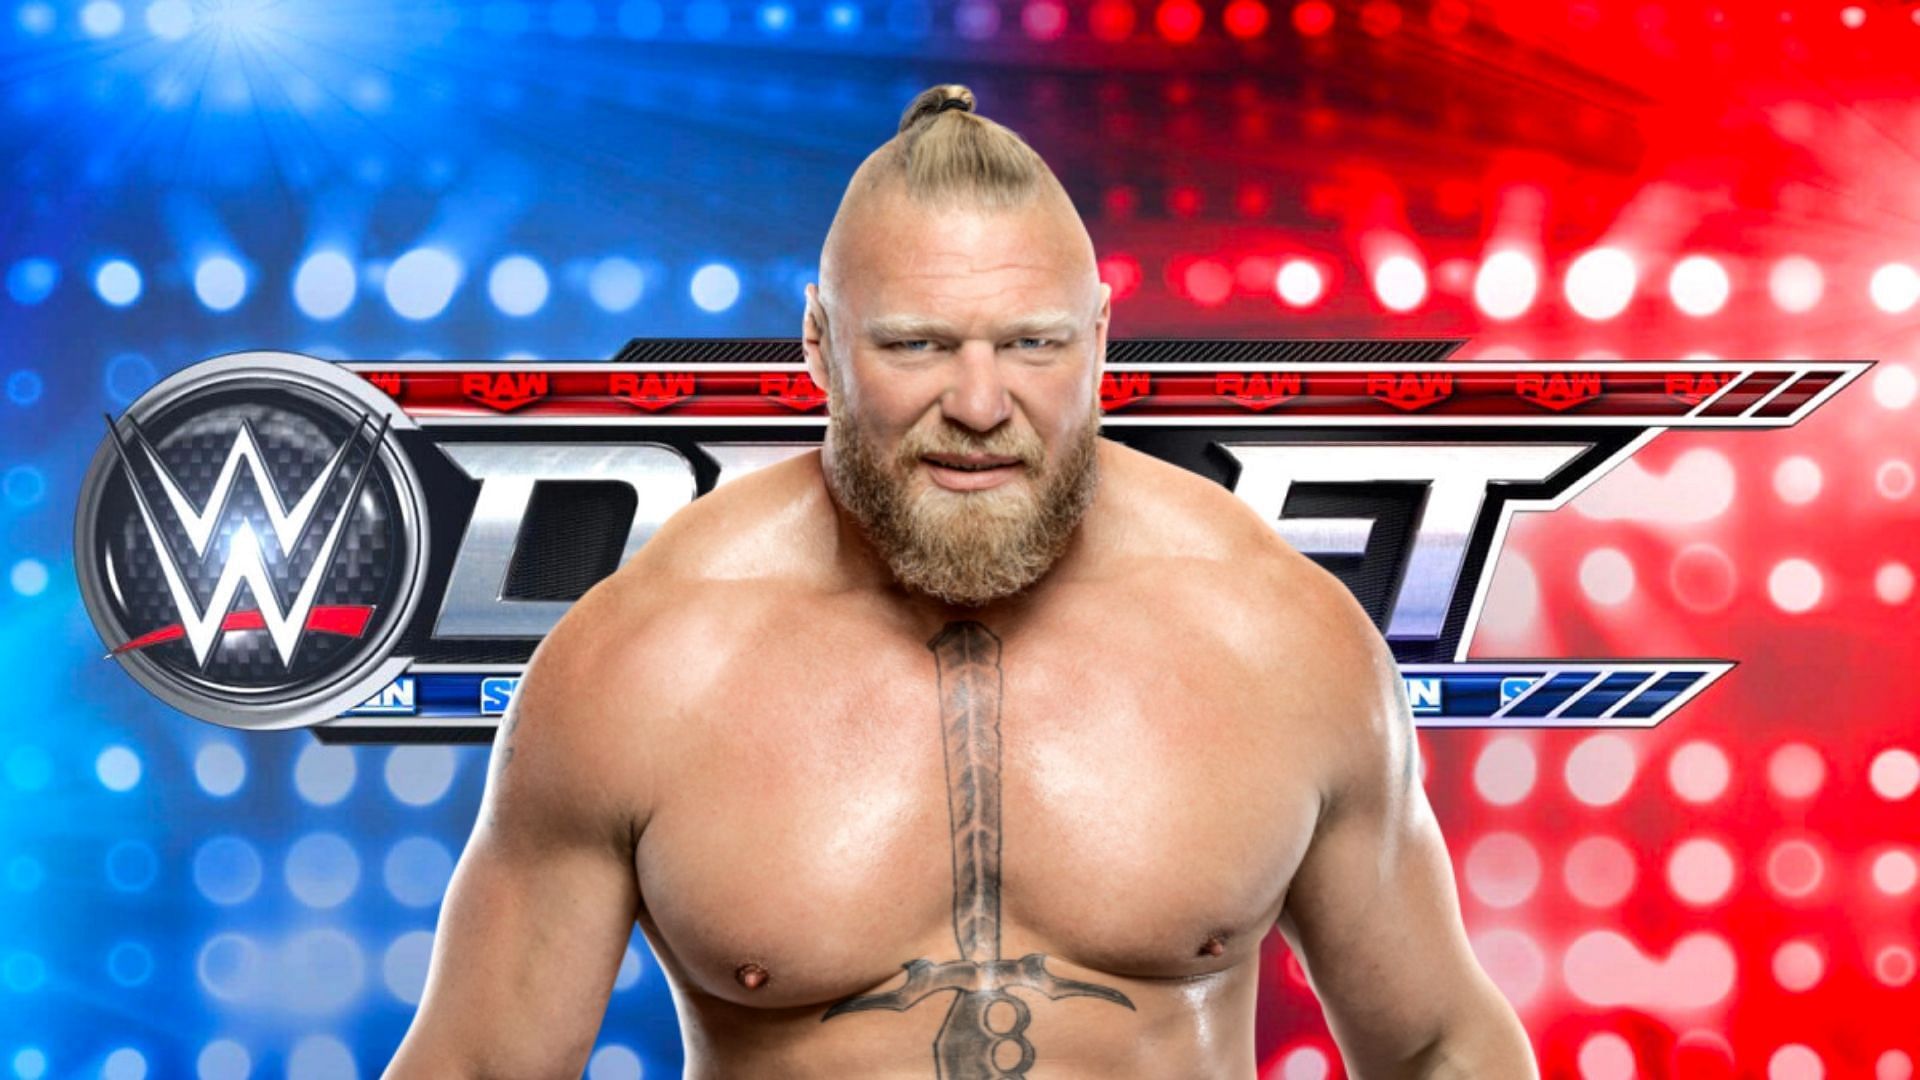 Brock Lesnar is set to face Cody Rhodes this Saturday at Backlash